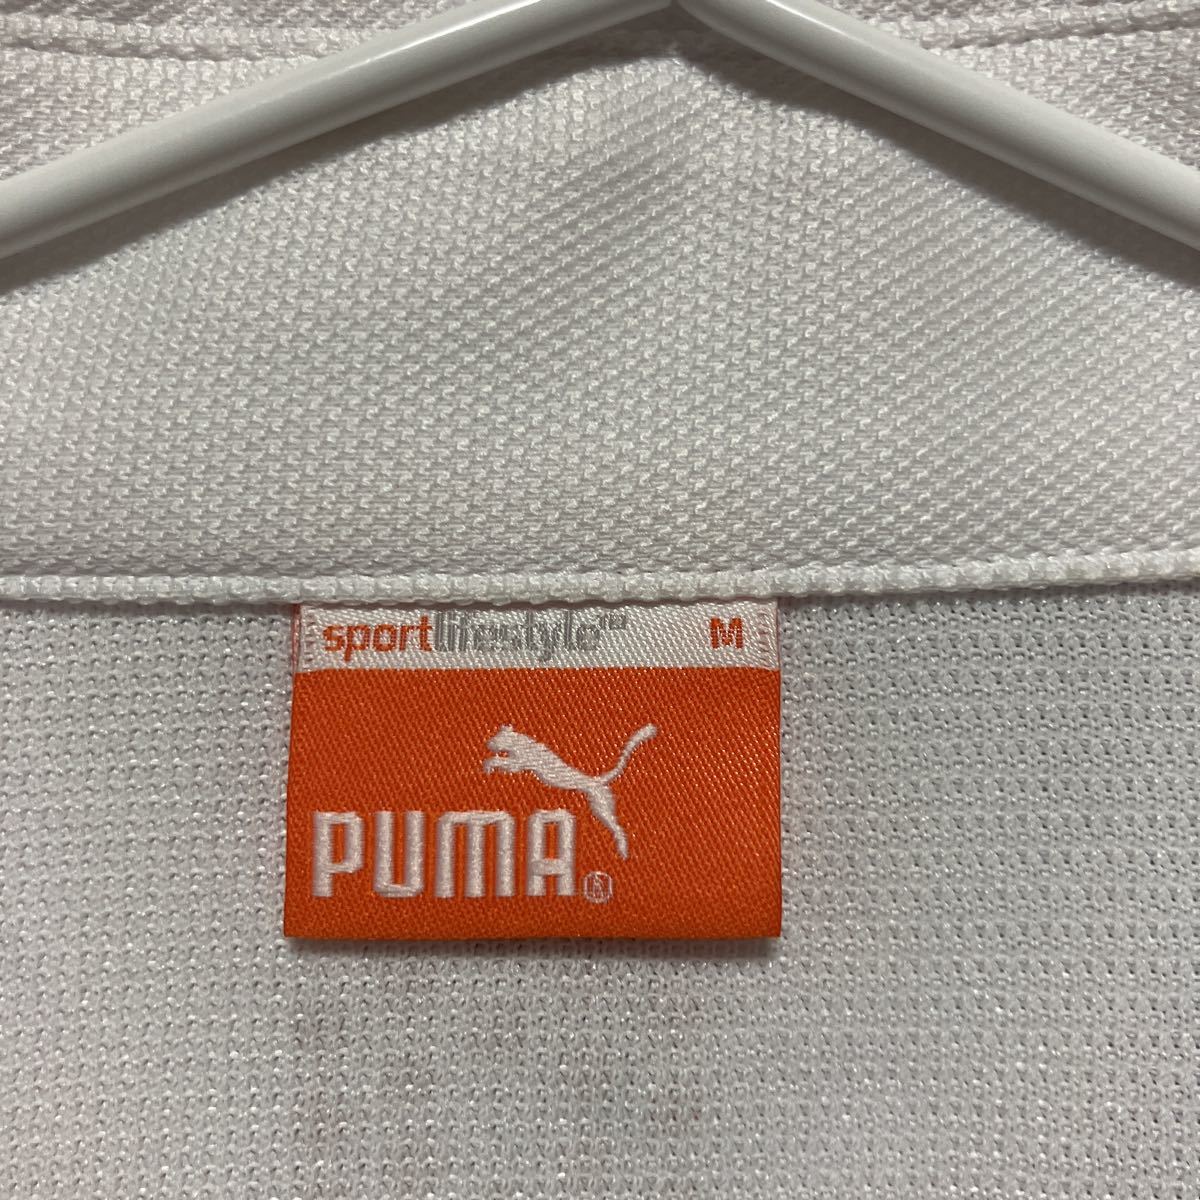 【PUMA GOLF】 プーマゴルフ メンズ 半袖ポロシャツ Mサイズ ホワイト ロゴ 送料無料_画像5